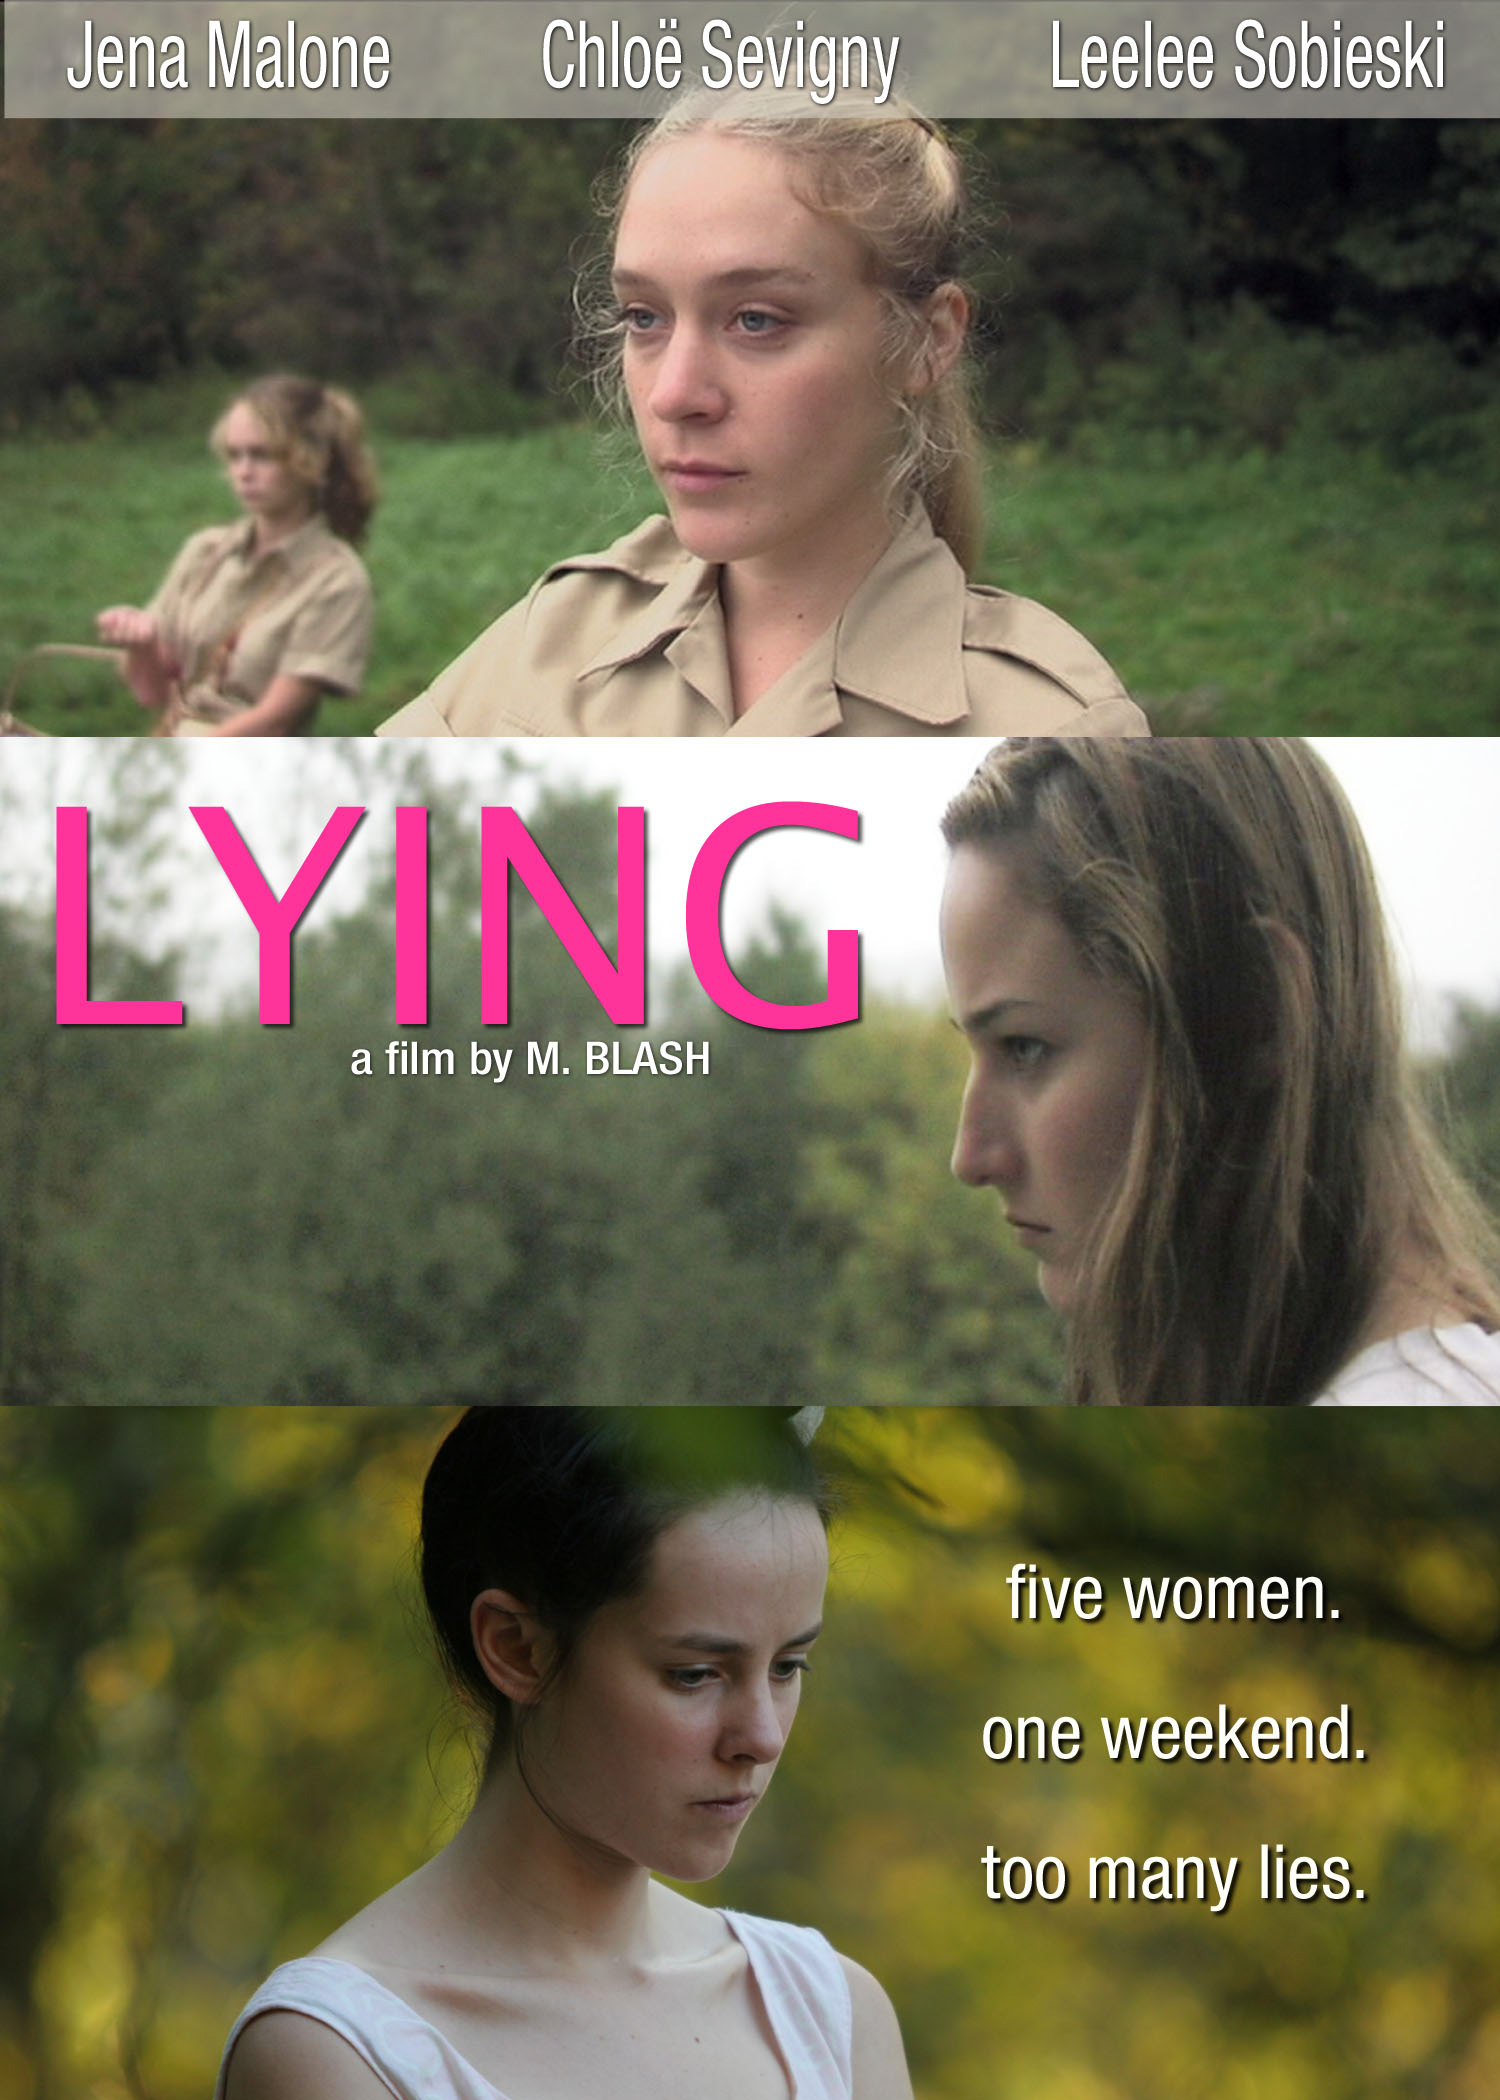 Lying, a film by M. Blash, movie poster